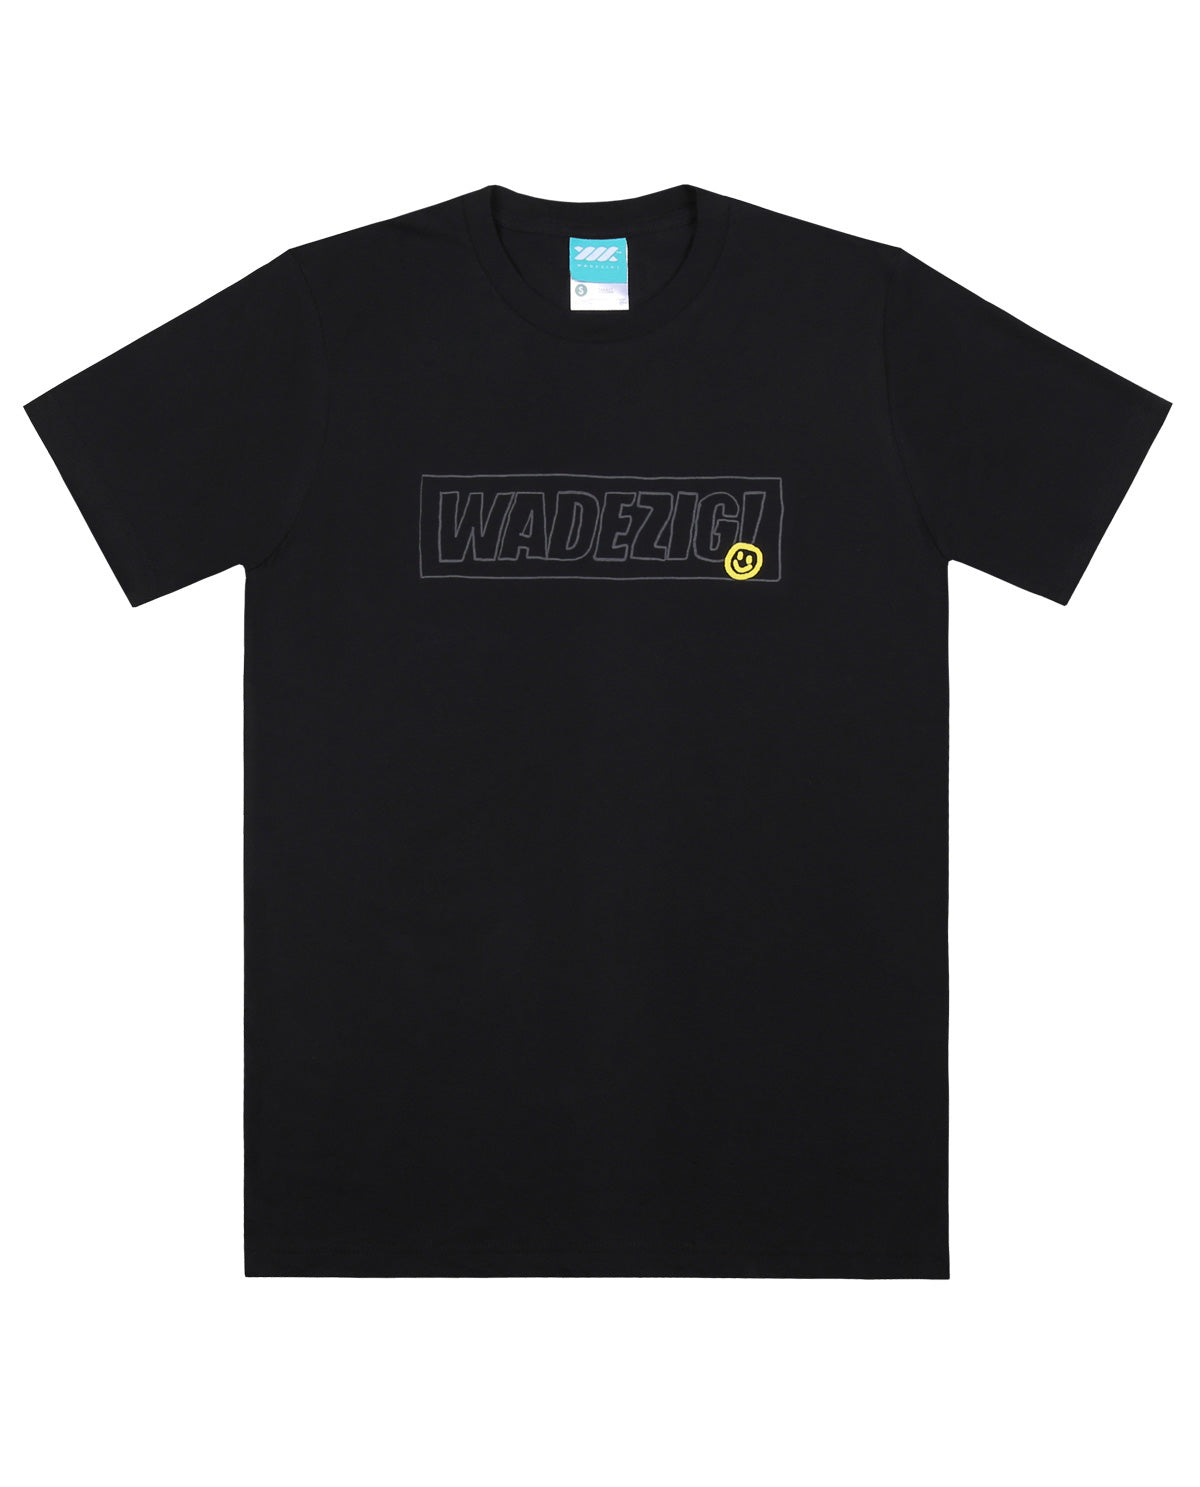 Wadezig! T-Shirt - Goodluck Black